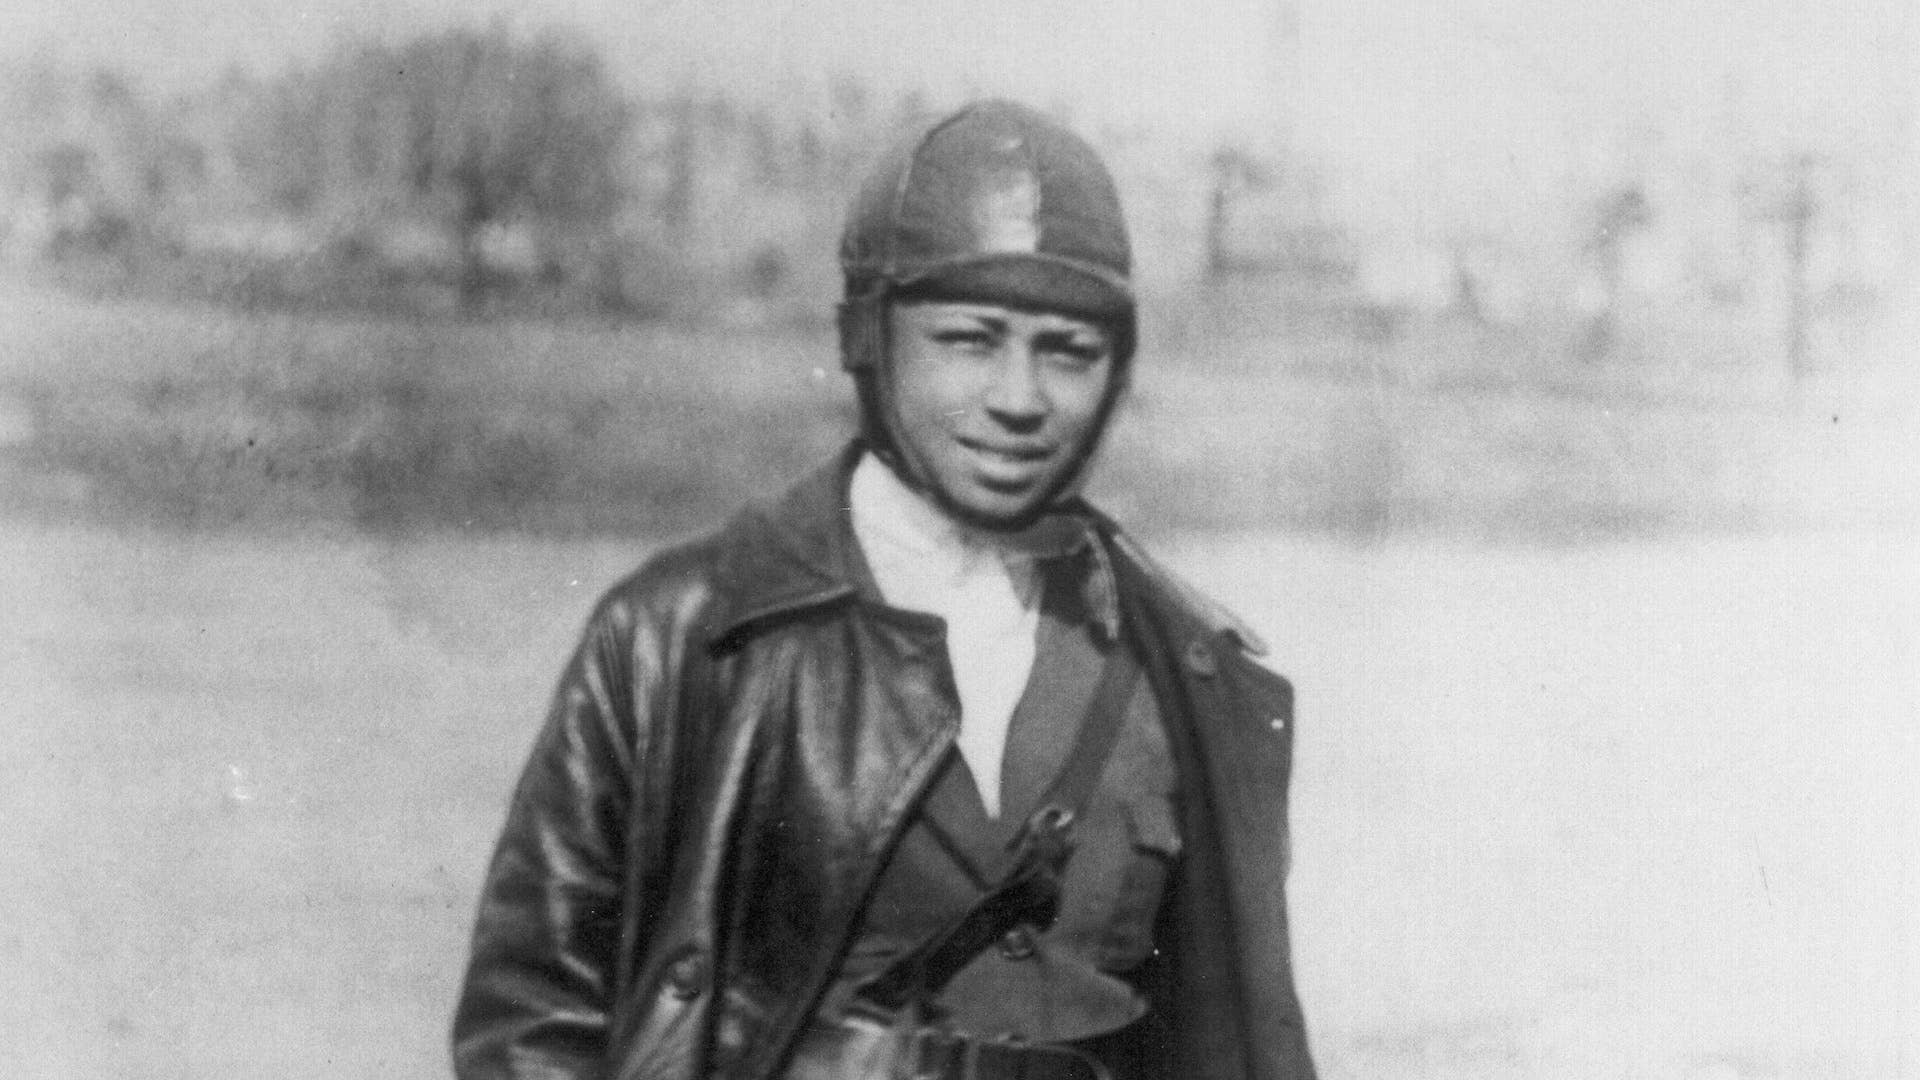 Photo of pilot Bessie Coleman, circa 1920